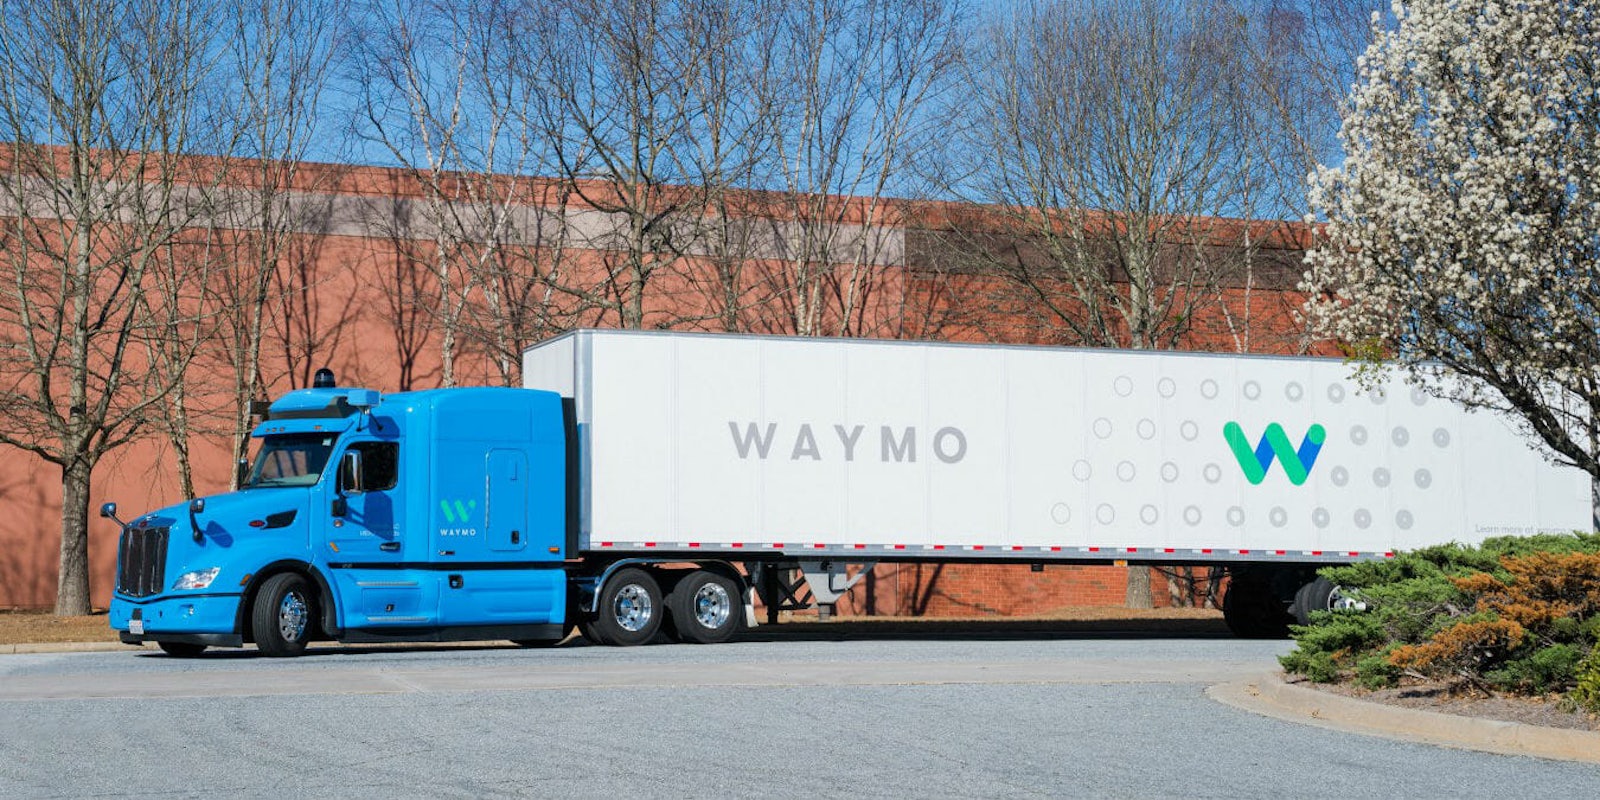 waymo self-driving autonomous truck